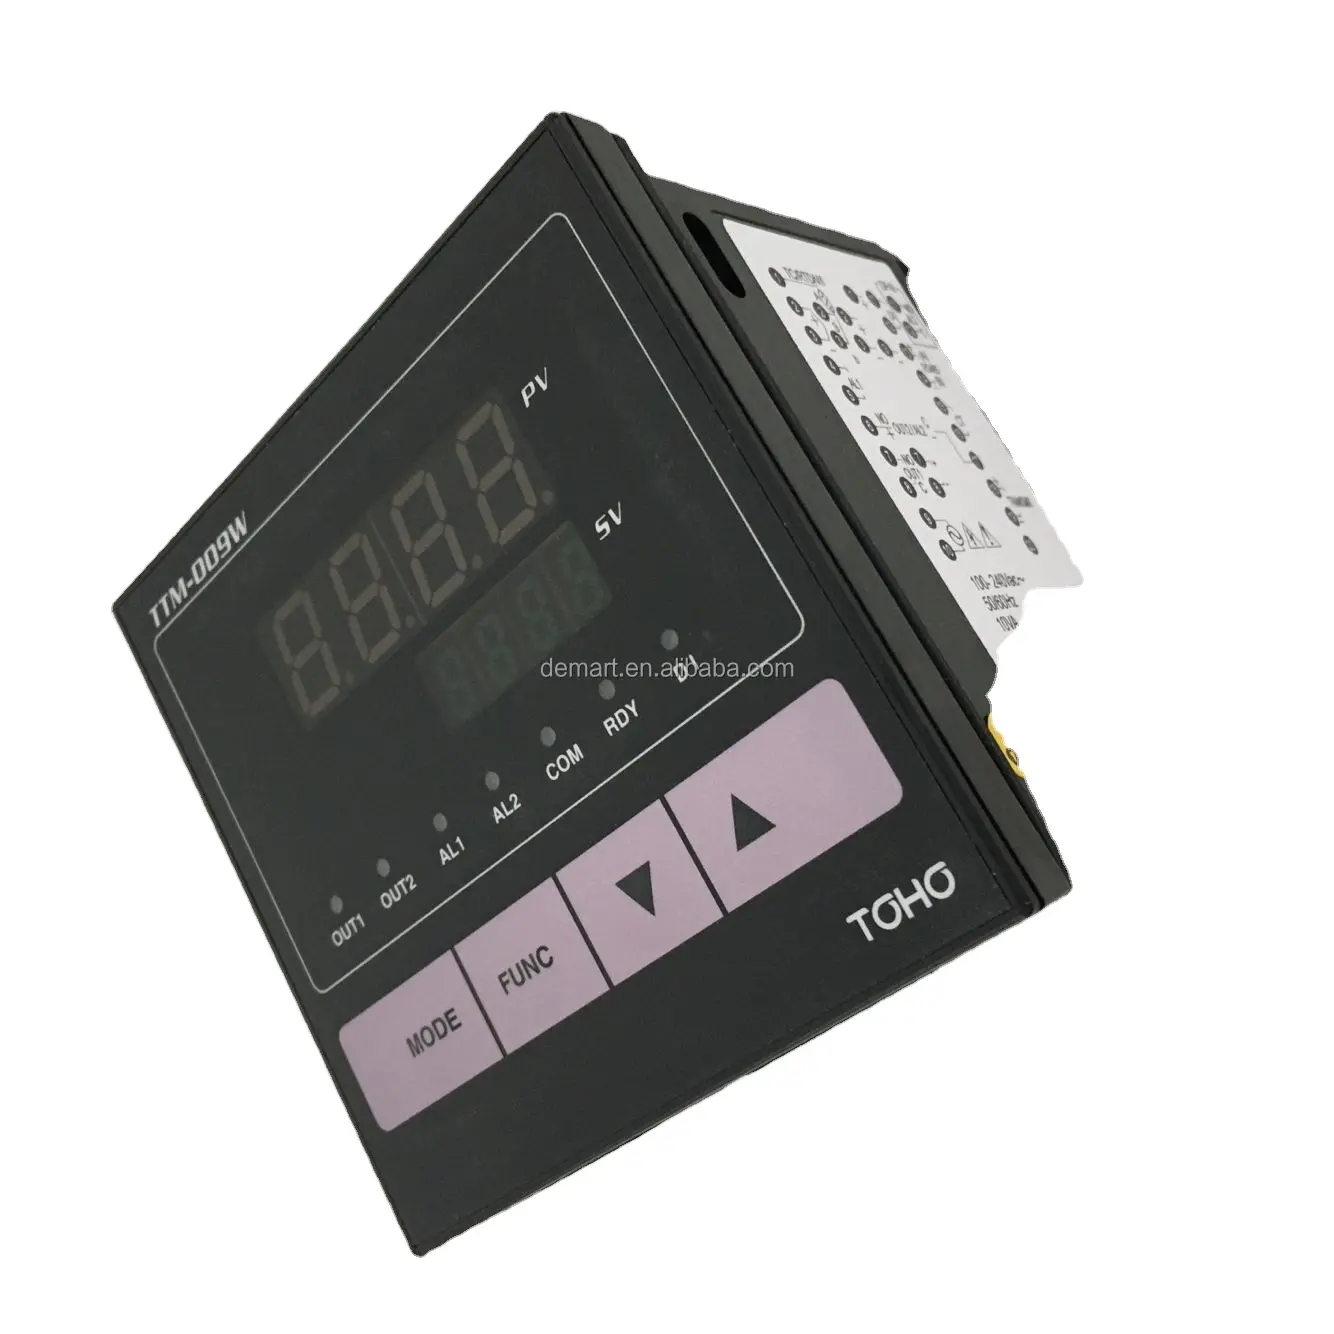 TTM-005W-R-ABRD TOHO temperature controller